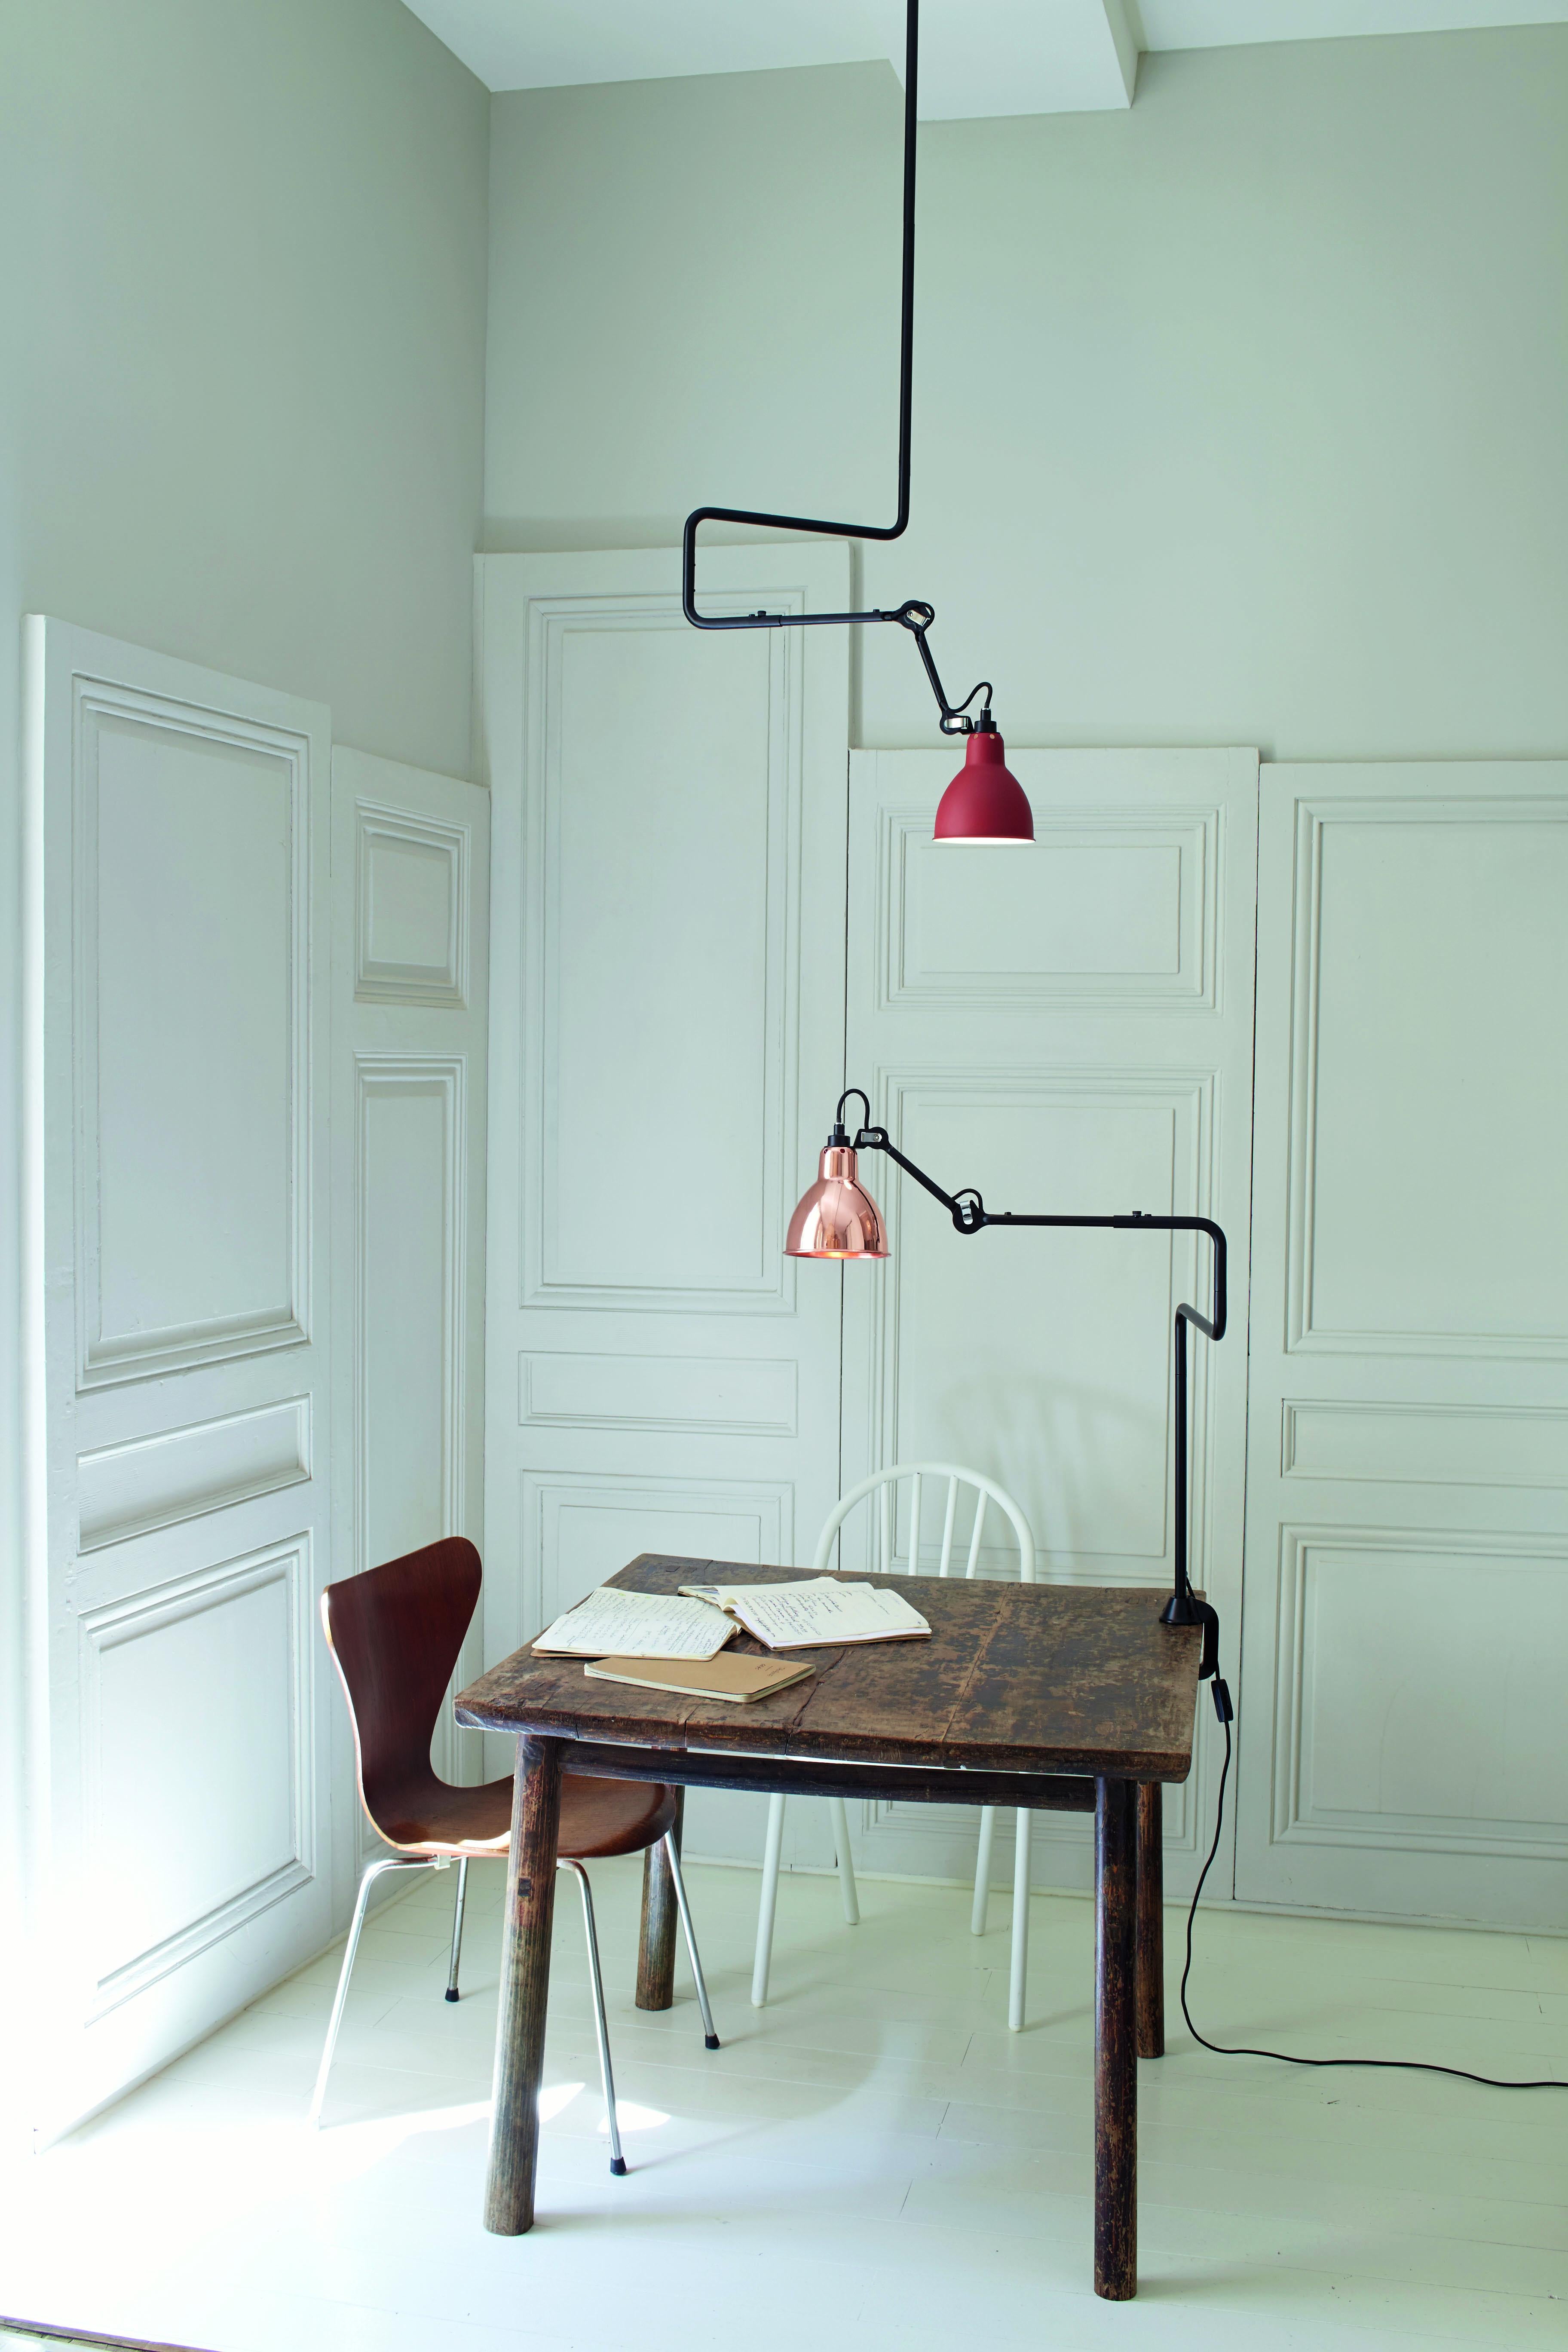 Post-Modern Red Lampe Gras N° 312 Ceiling Lamp by Bernard-Albin Gras